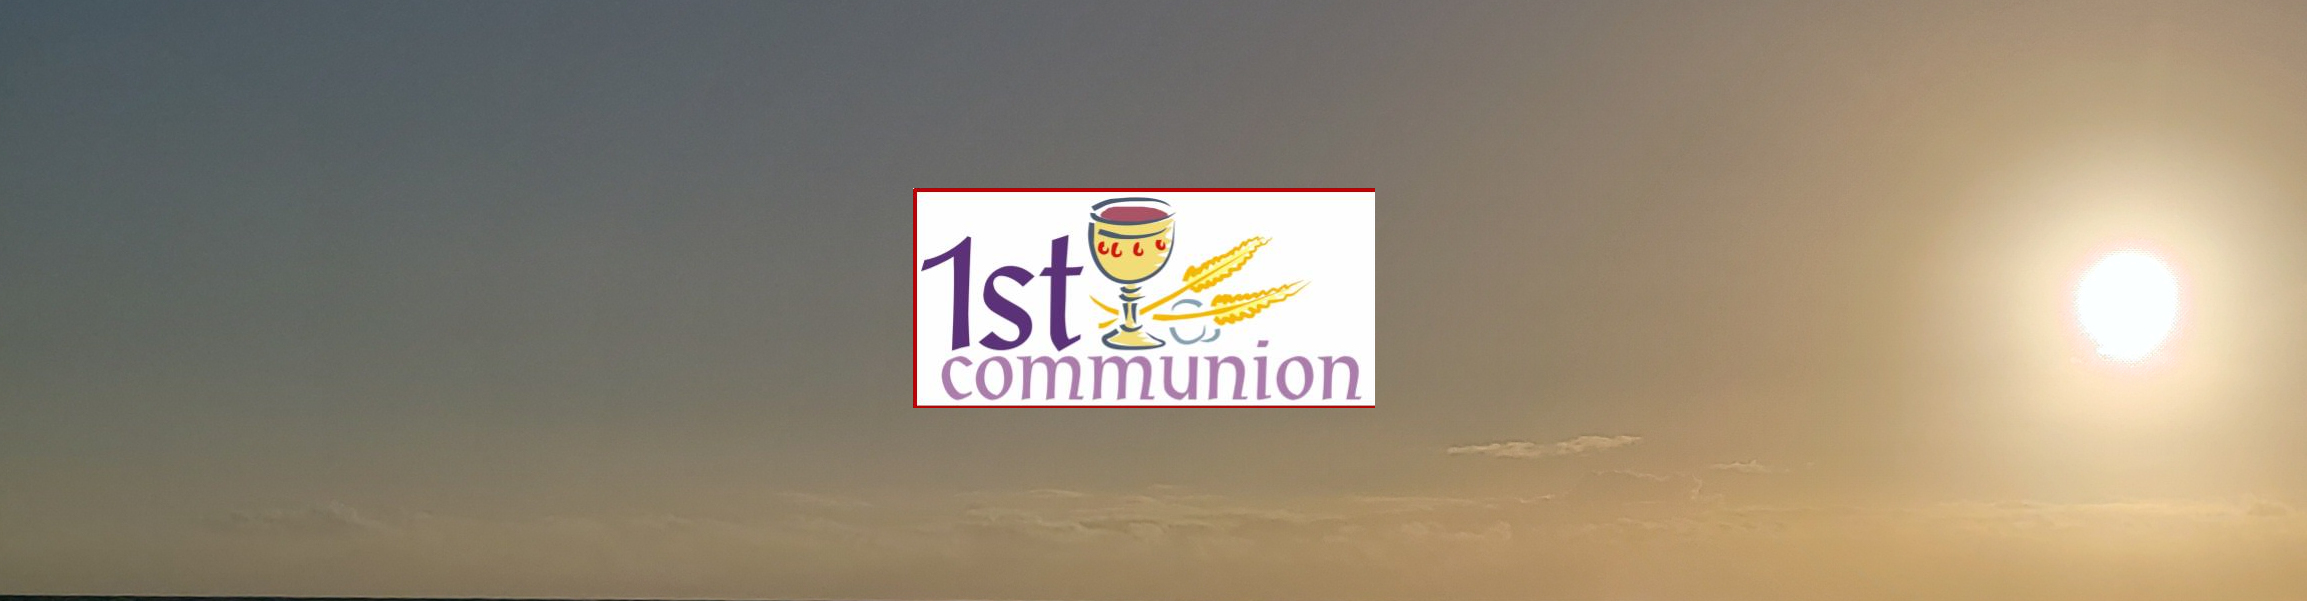 First Communion Celebration